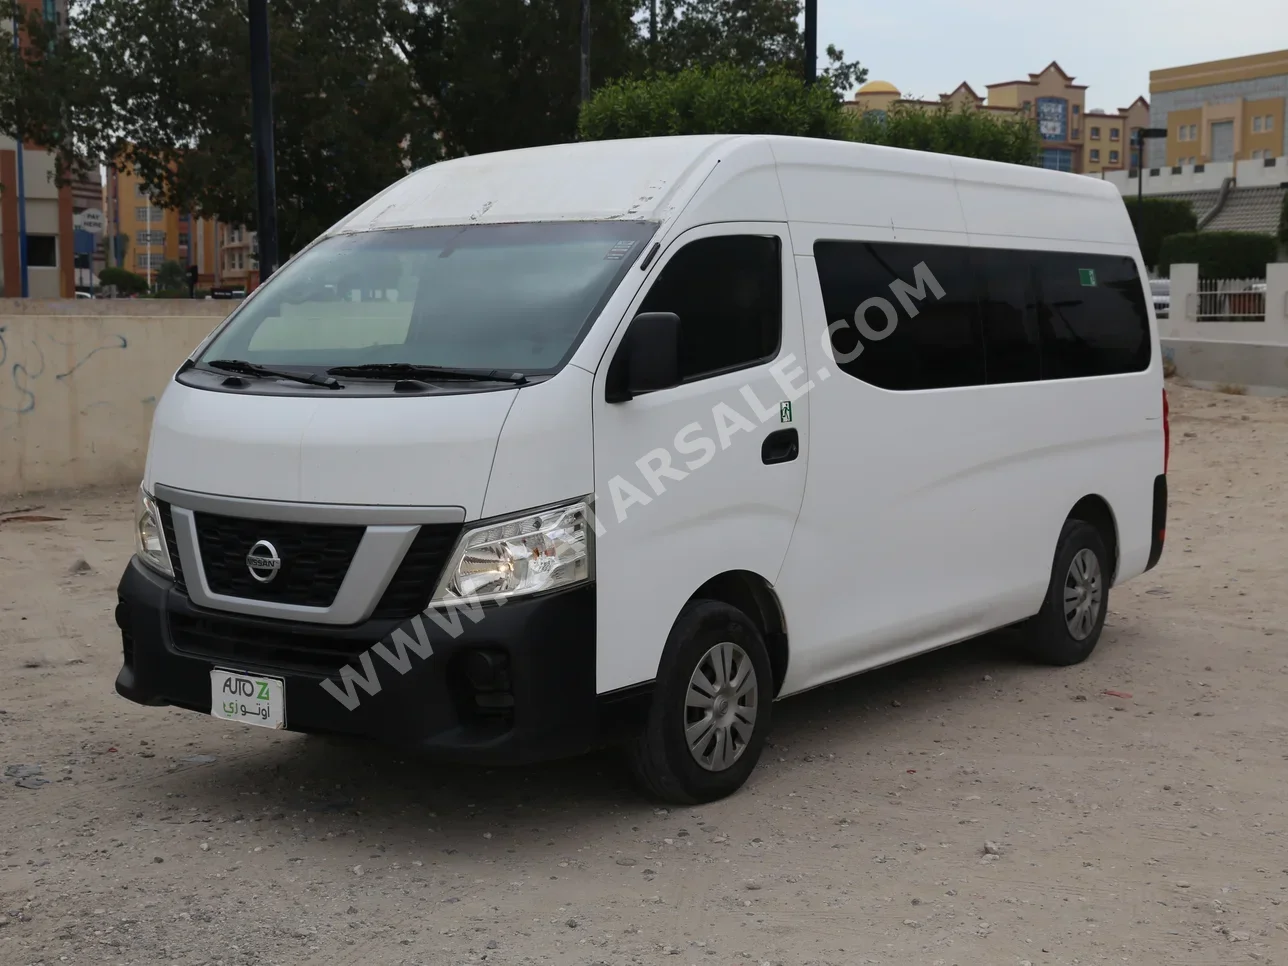 Nissan  Urvan  2018  Manual  251,000 Km  4 Cylinder  Front Wheel Drive (FWD)  Van / Bus  White